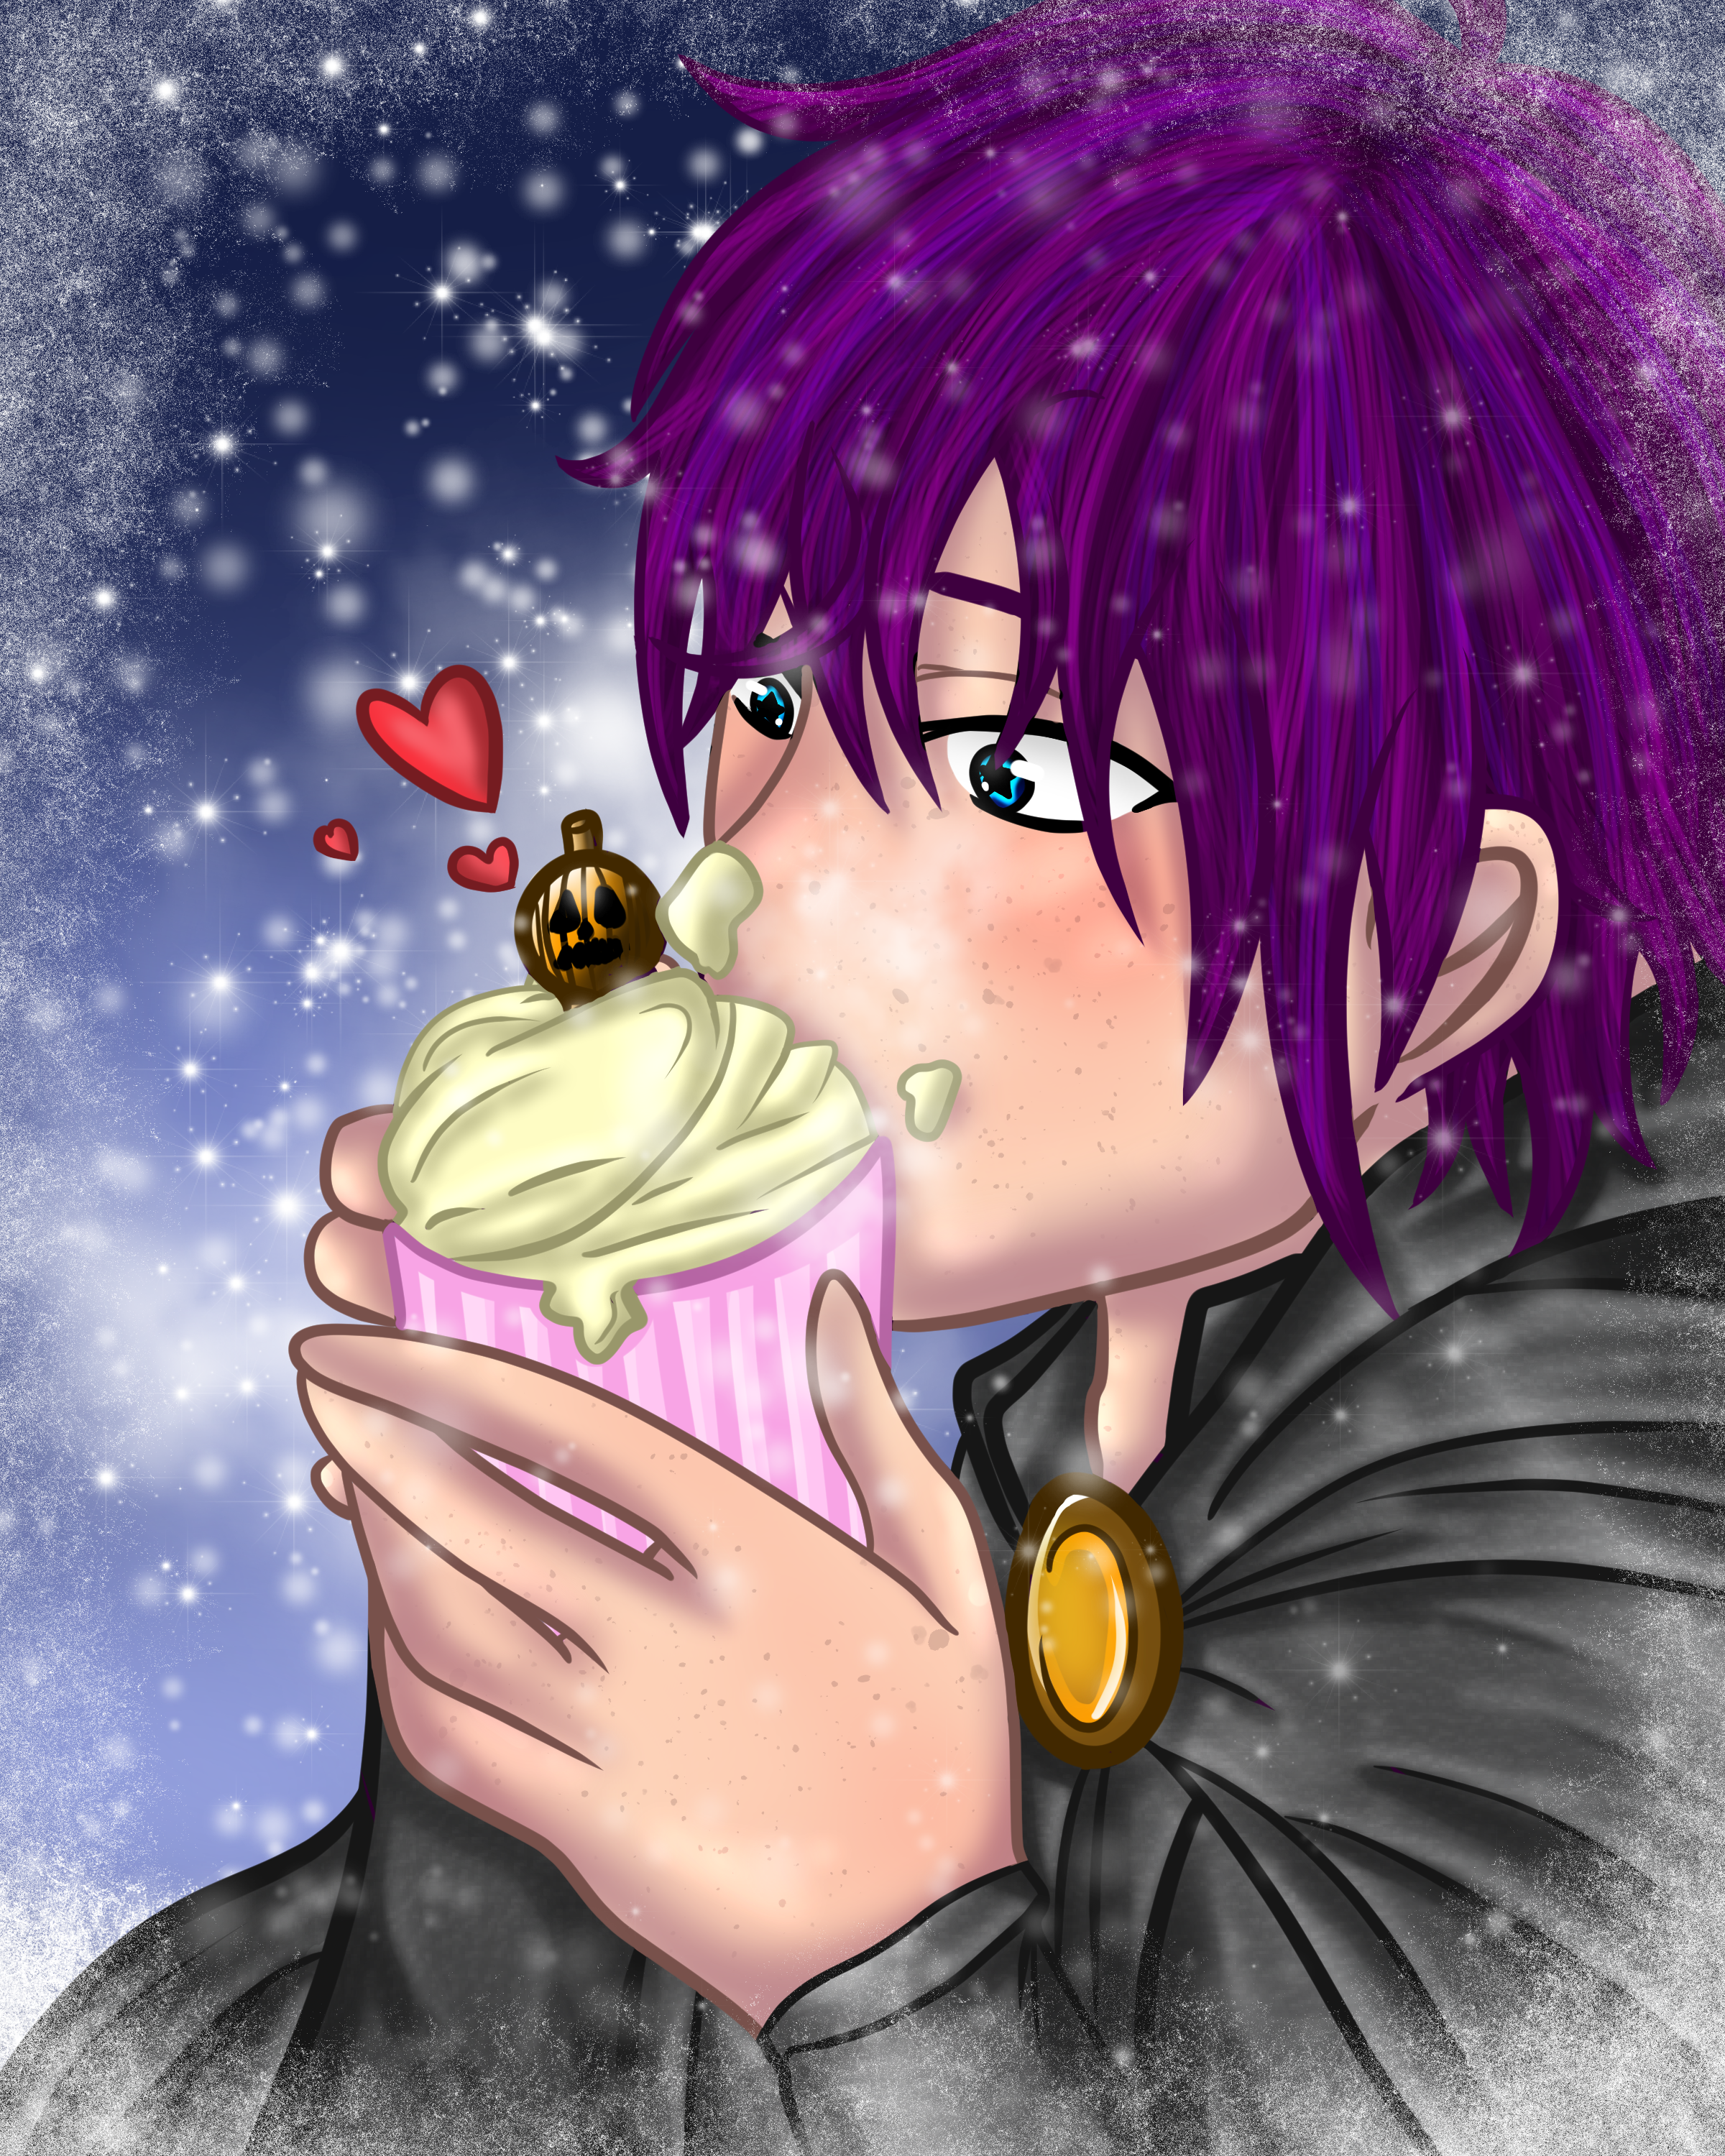 Anime Boy Eating a Cupcake by Asuna76 on DeviantArt